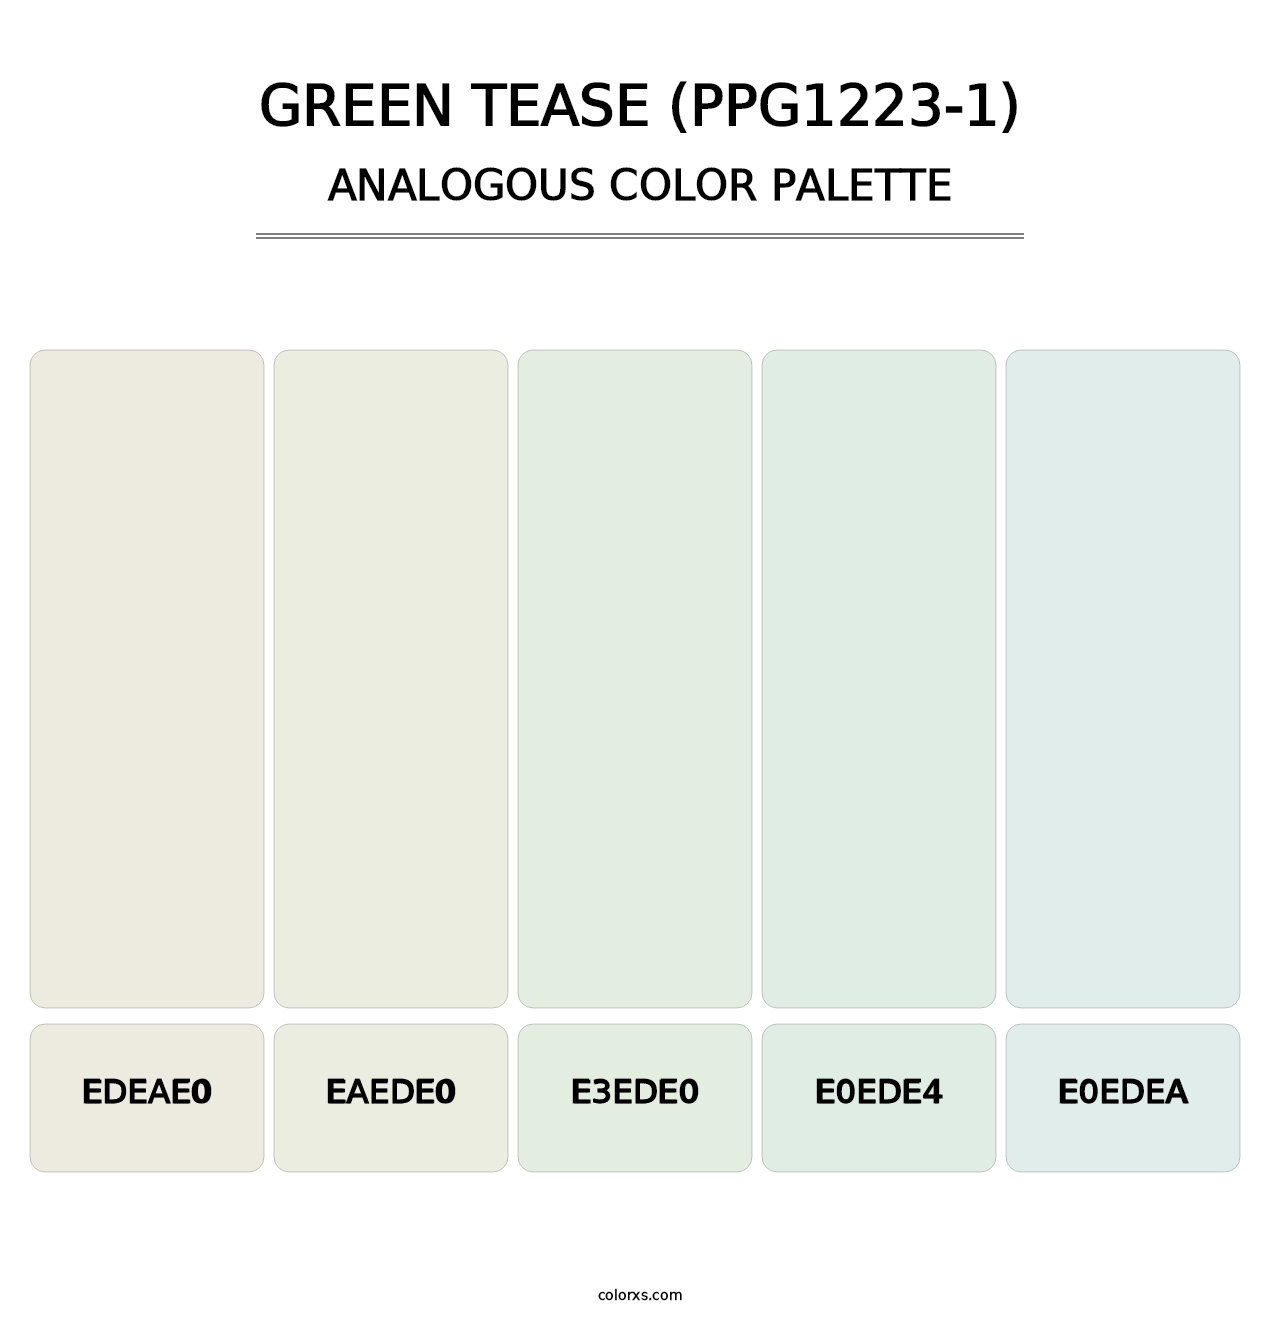 Green Tease (PPG1223-1) - Analogous Color Palette